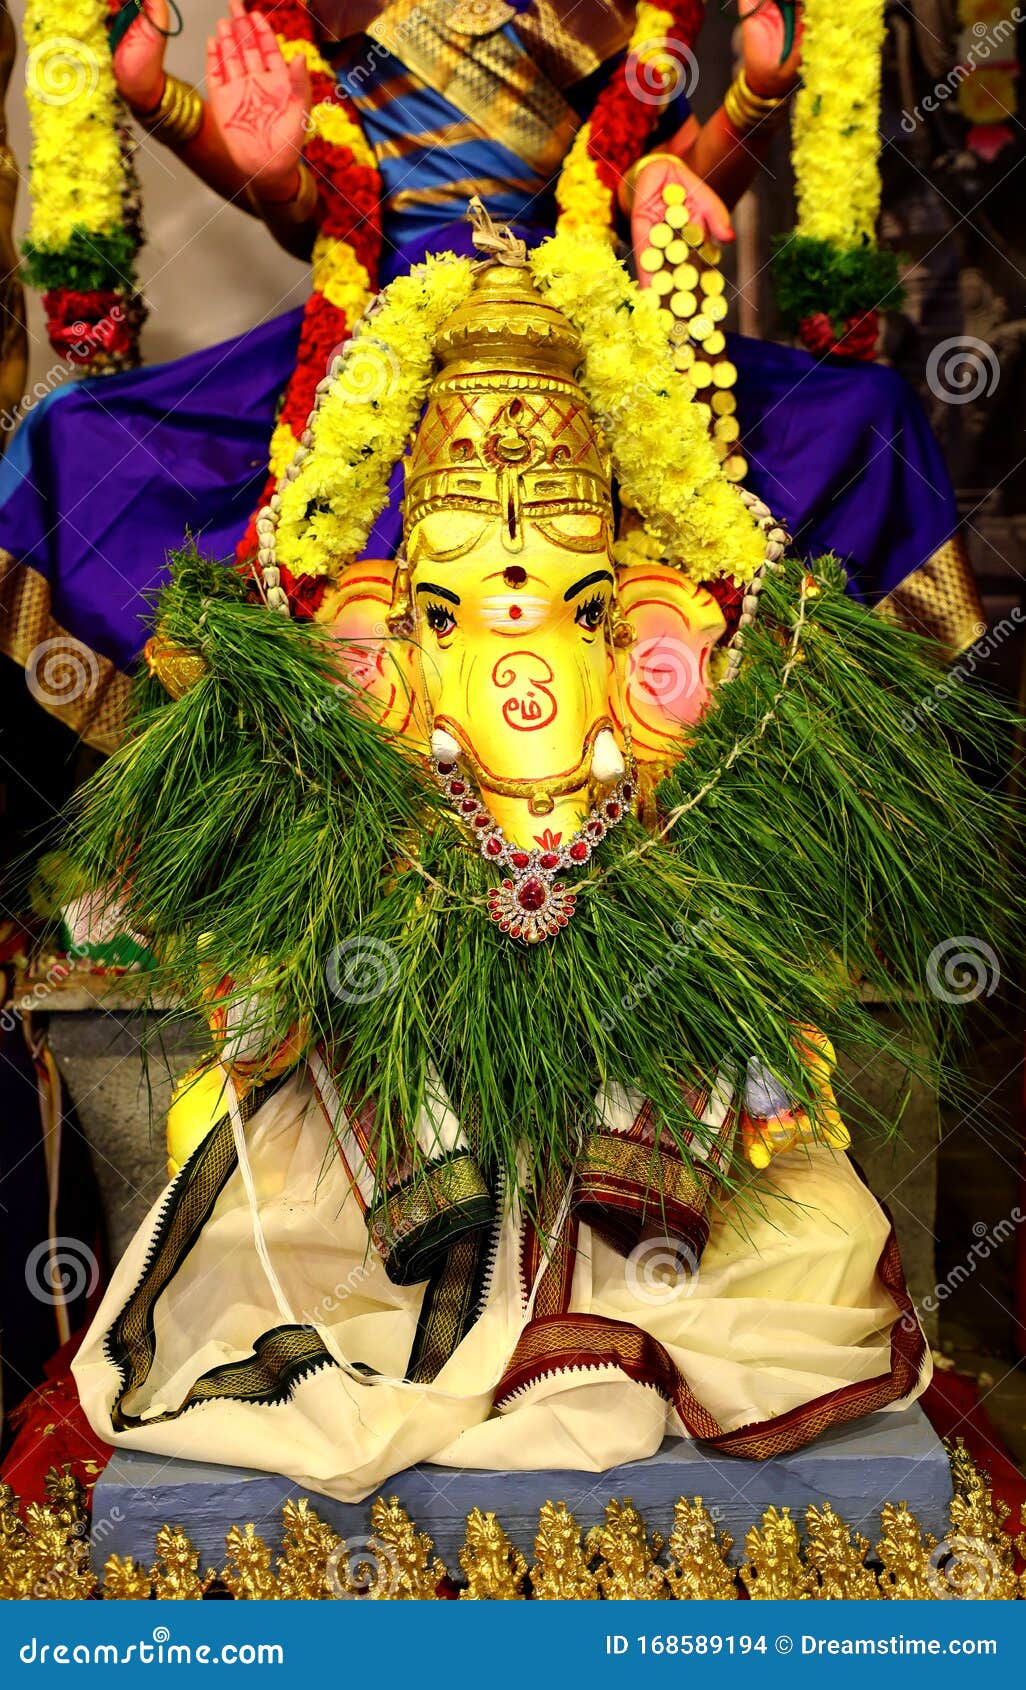 ganesha, the elephant-headed deity of hinduism